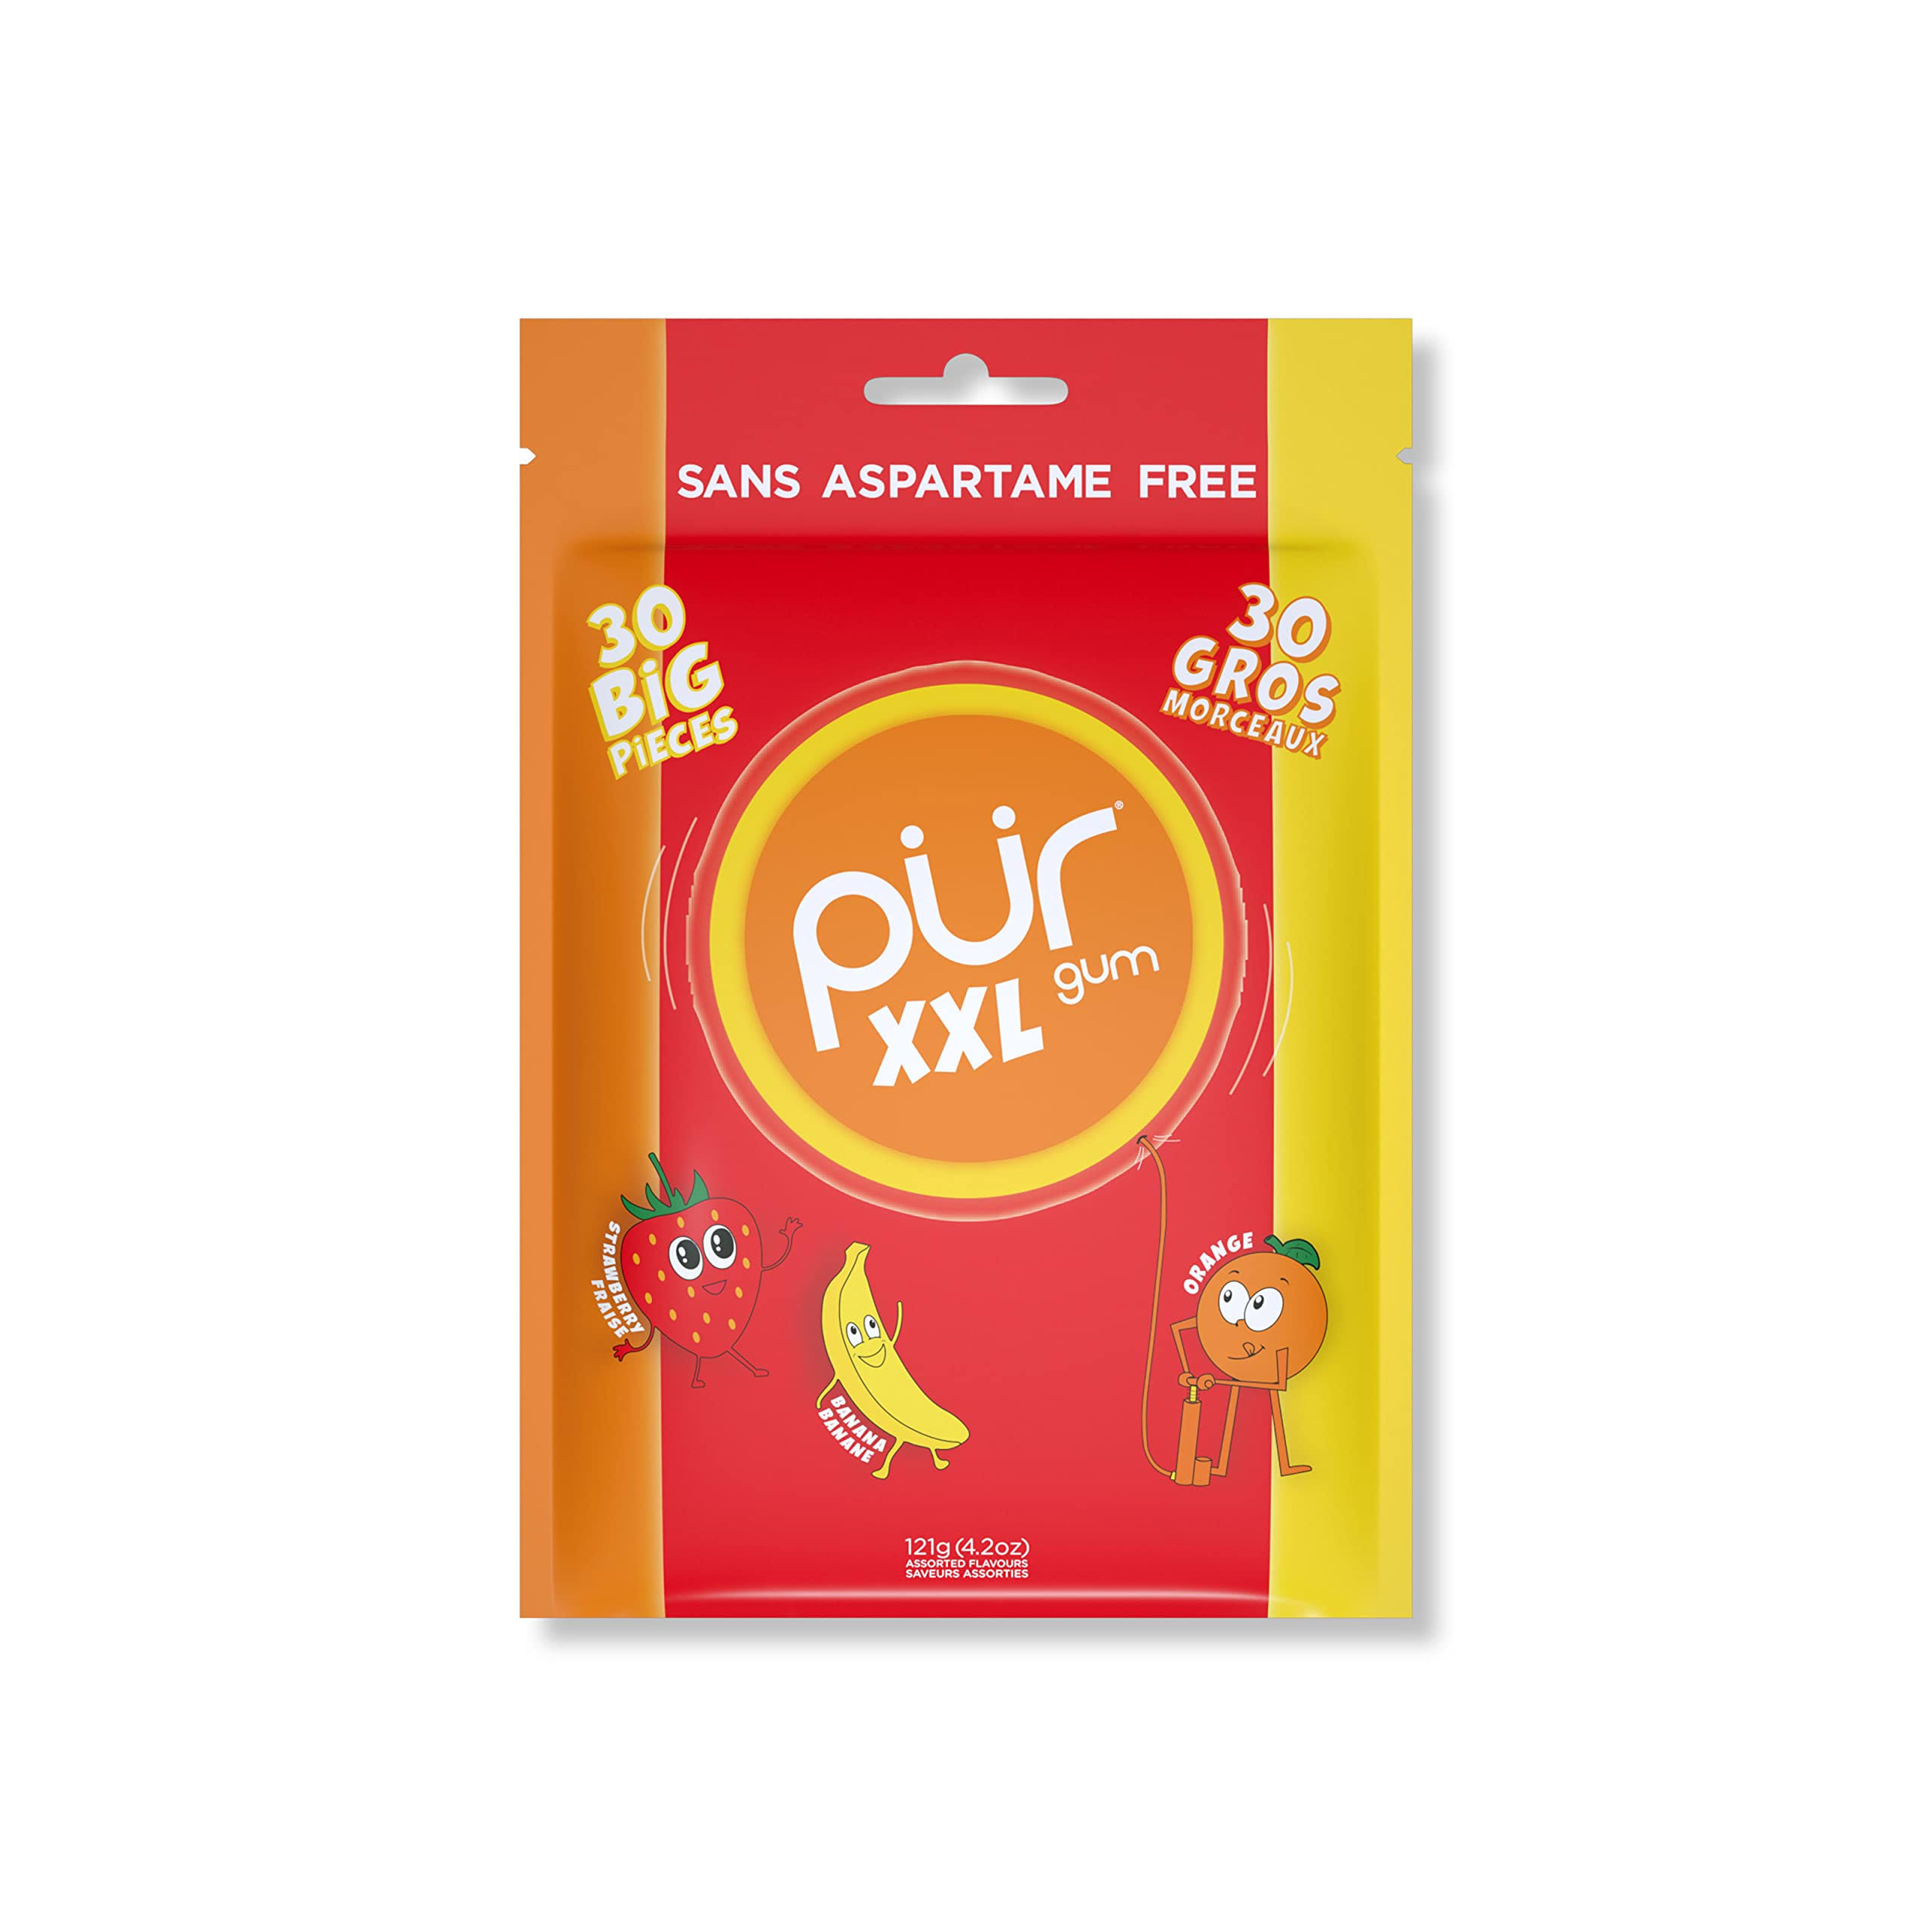 Pur XXL Gum | Sugar Free Chewing Gum | 100% Xylitol | Vegan, Aspartame Free, Gluten Free & Keto Friendly | Natural Fruit Flavored Gum, 30 Pieces